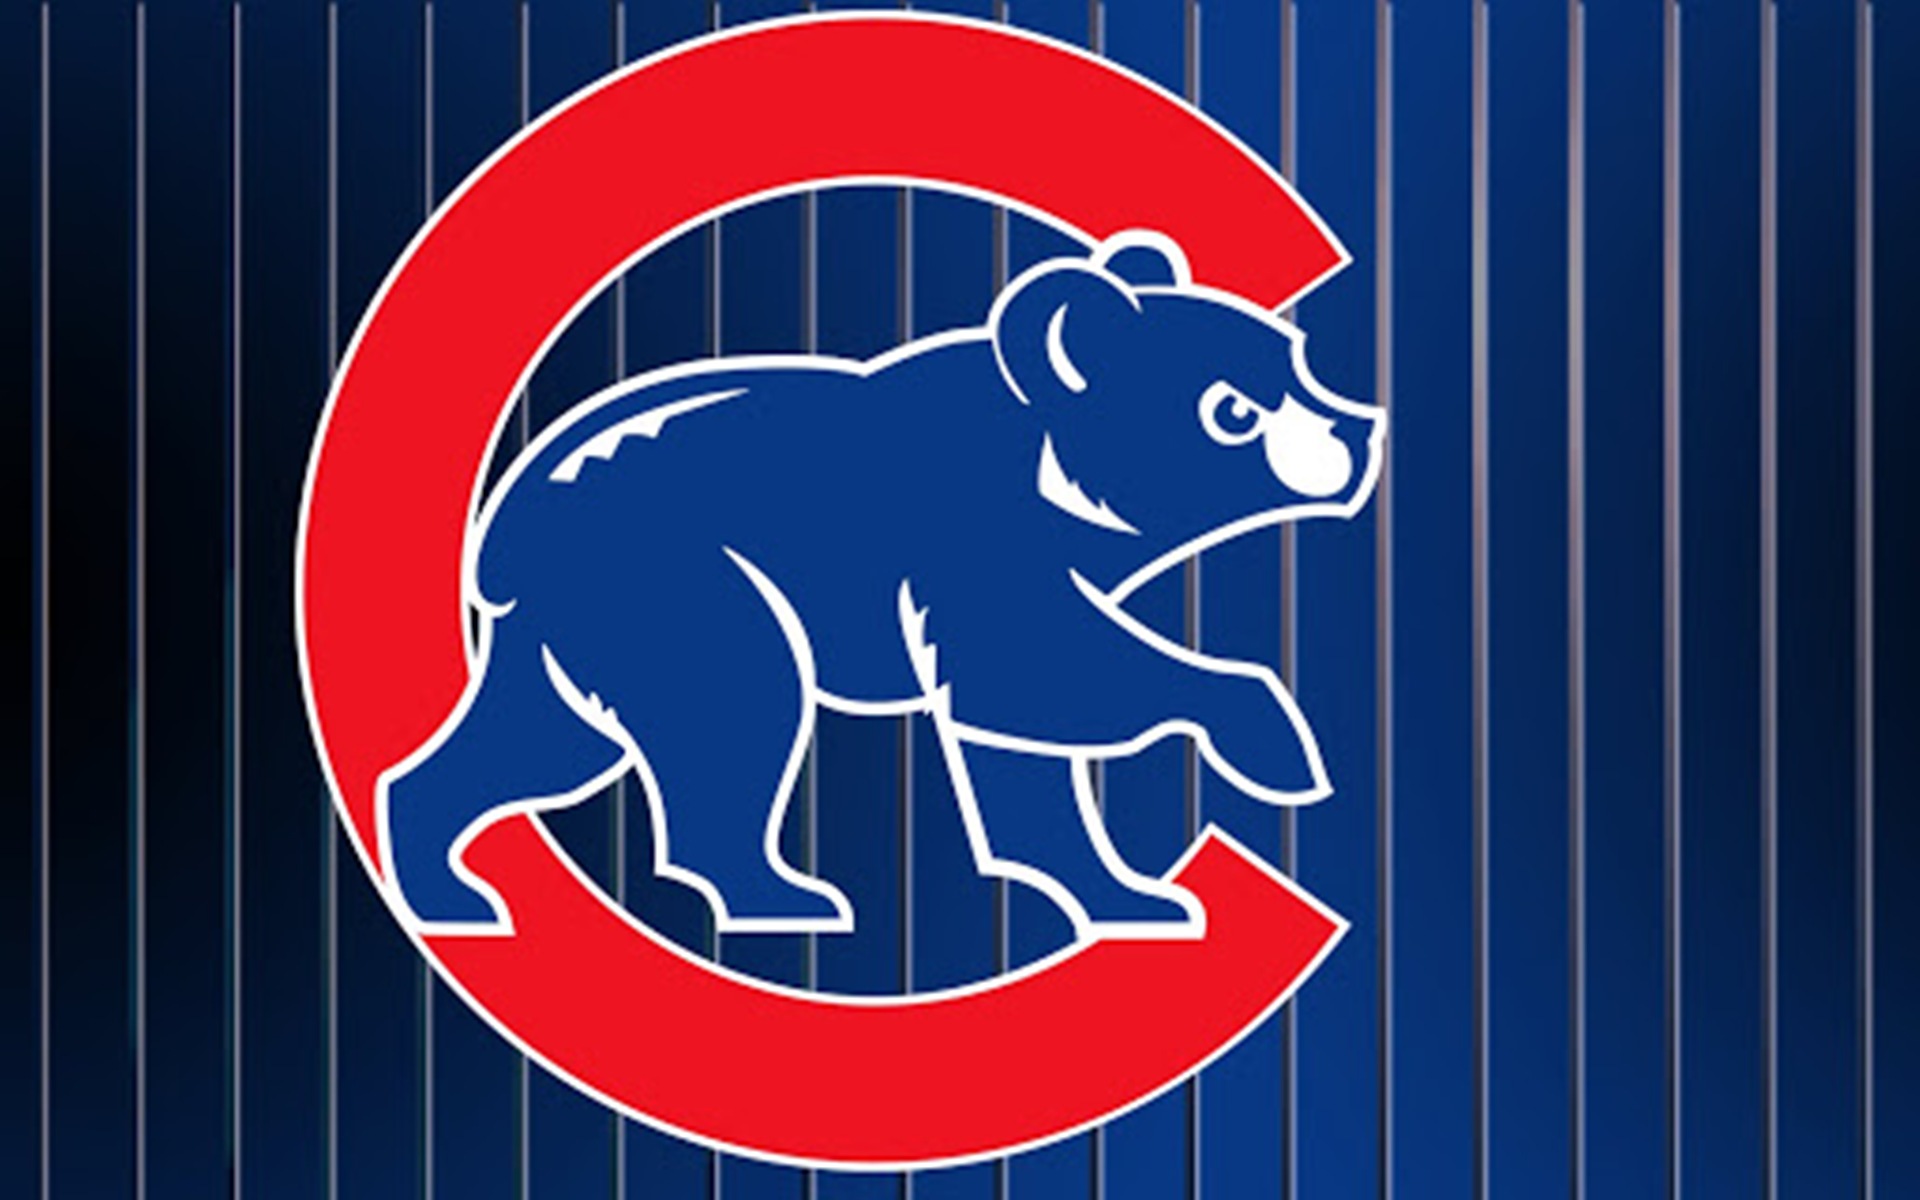 Wallpaper Details File Name Chicago Cubs Uploaded By Scherma